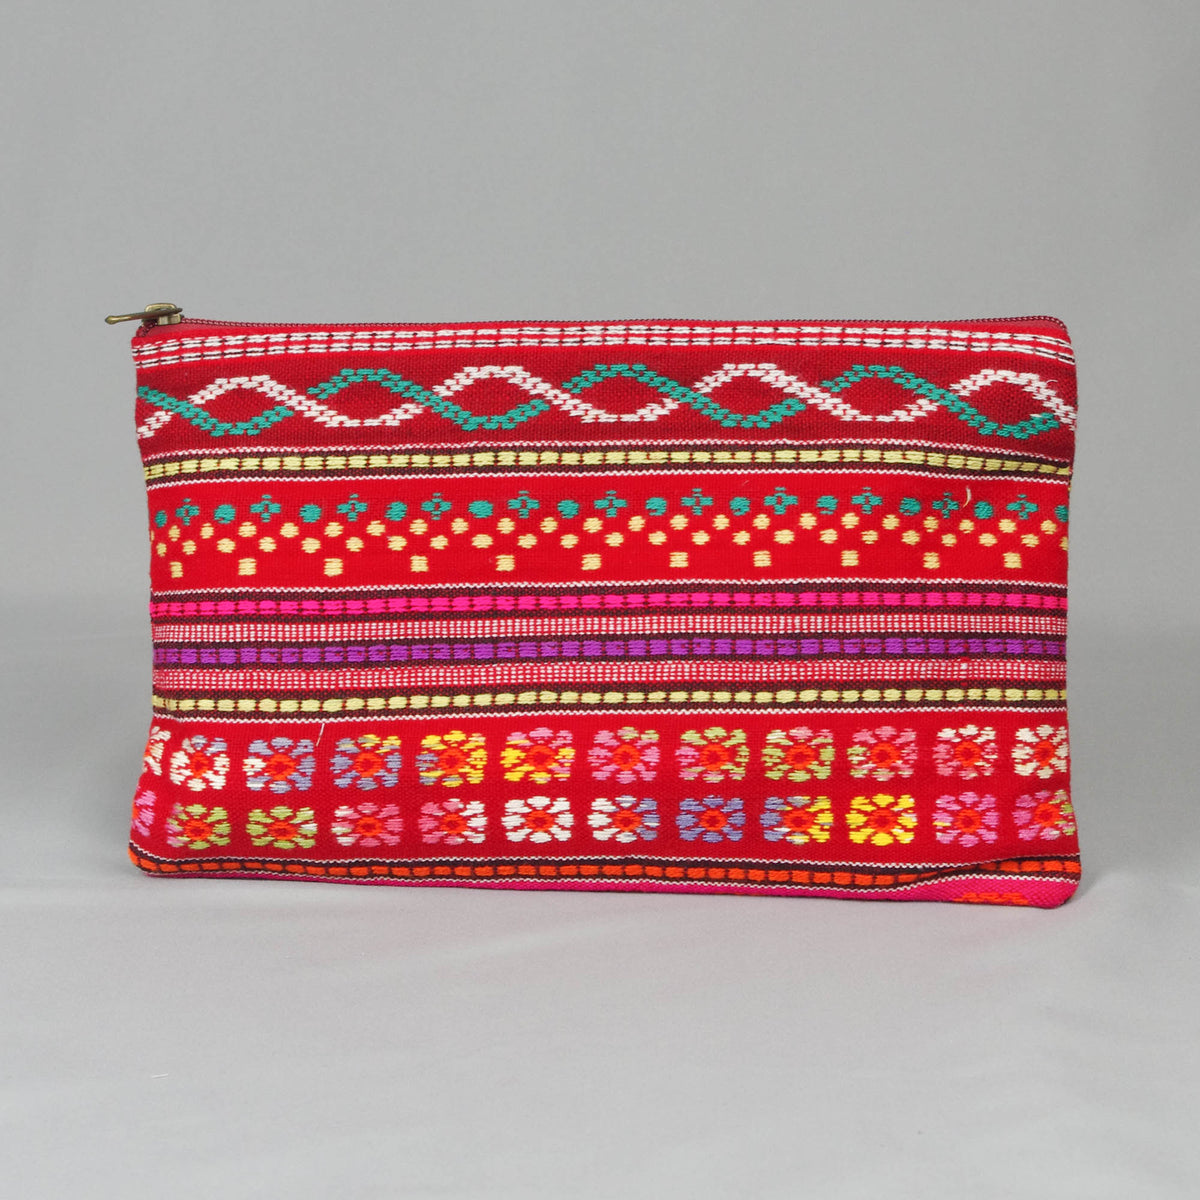 Boho Handloom Weave Clutch Bag - Pink Red